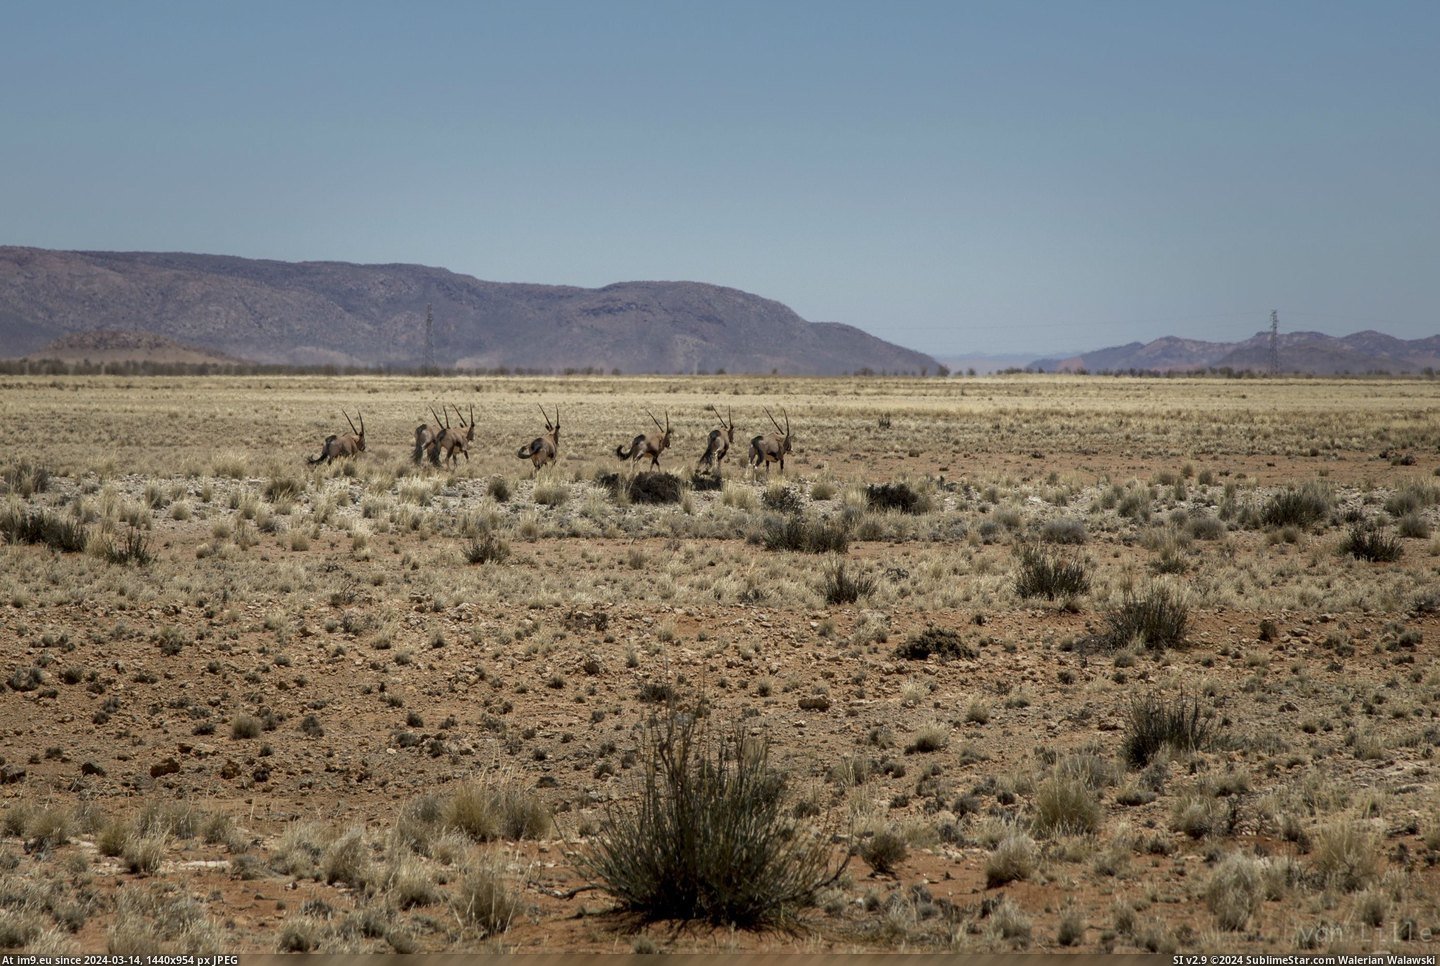 #South #Africa #Namibia #Herd #Kalahari #Desert #Running [Earthporn] A herd of Gemsbok (Oryx) running through the Kalahari desert near the border of South Africa-Namibia.  [3709x2473] Pic. (Изображение из альбом My r/EARTHPORN favs))